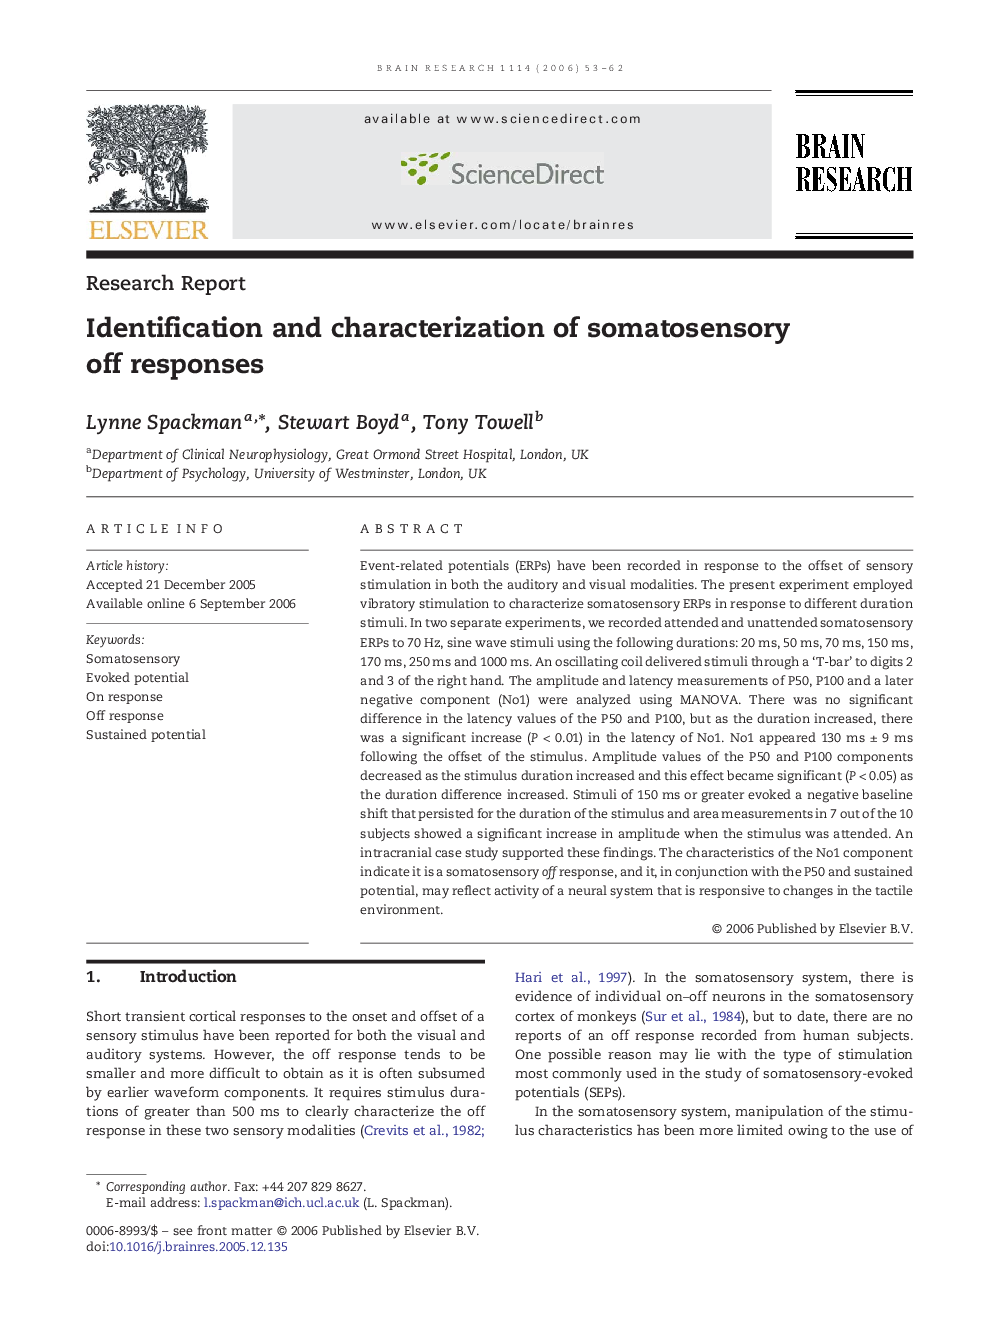 Identification and characterization of somatosensory off responses